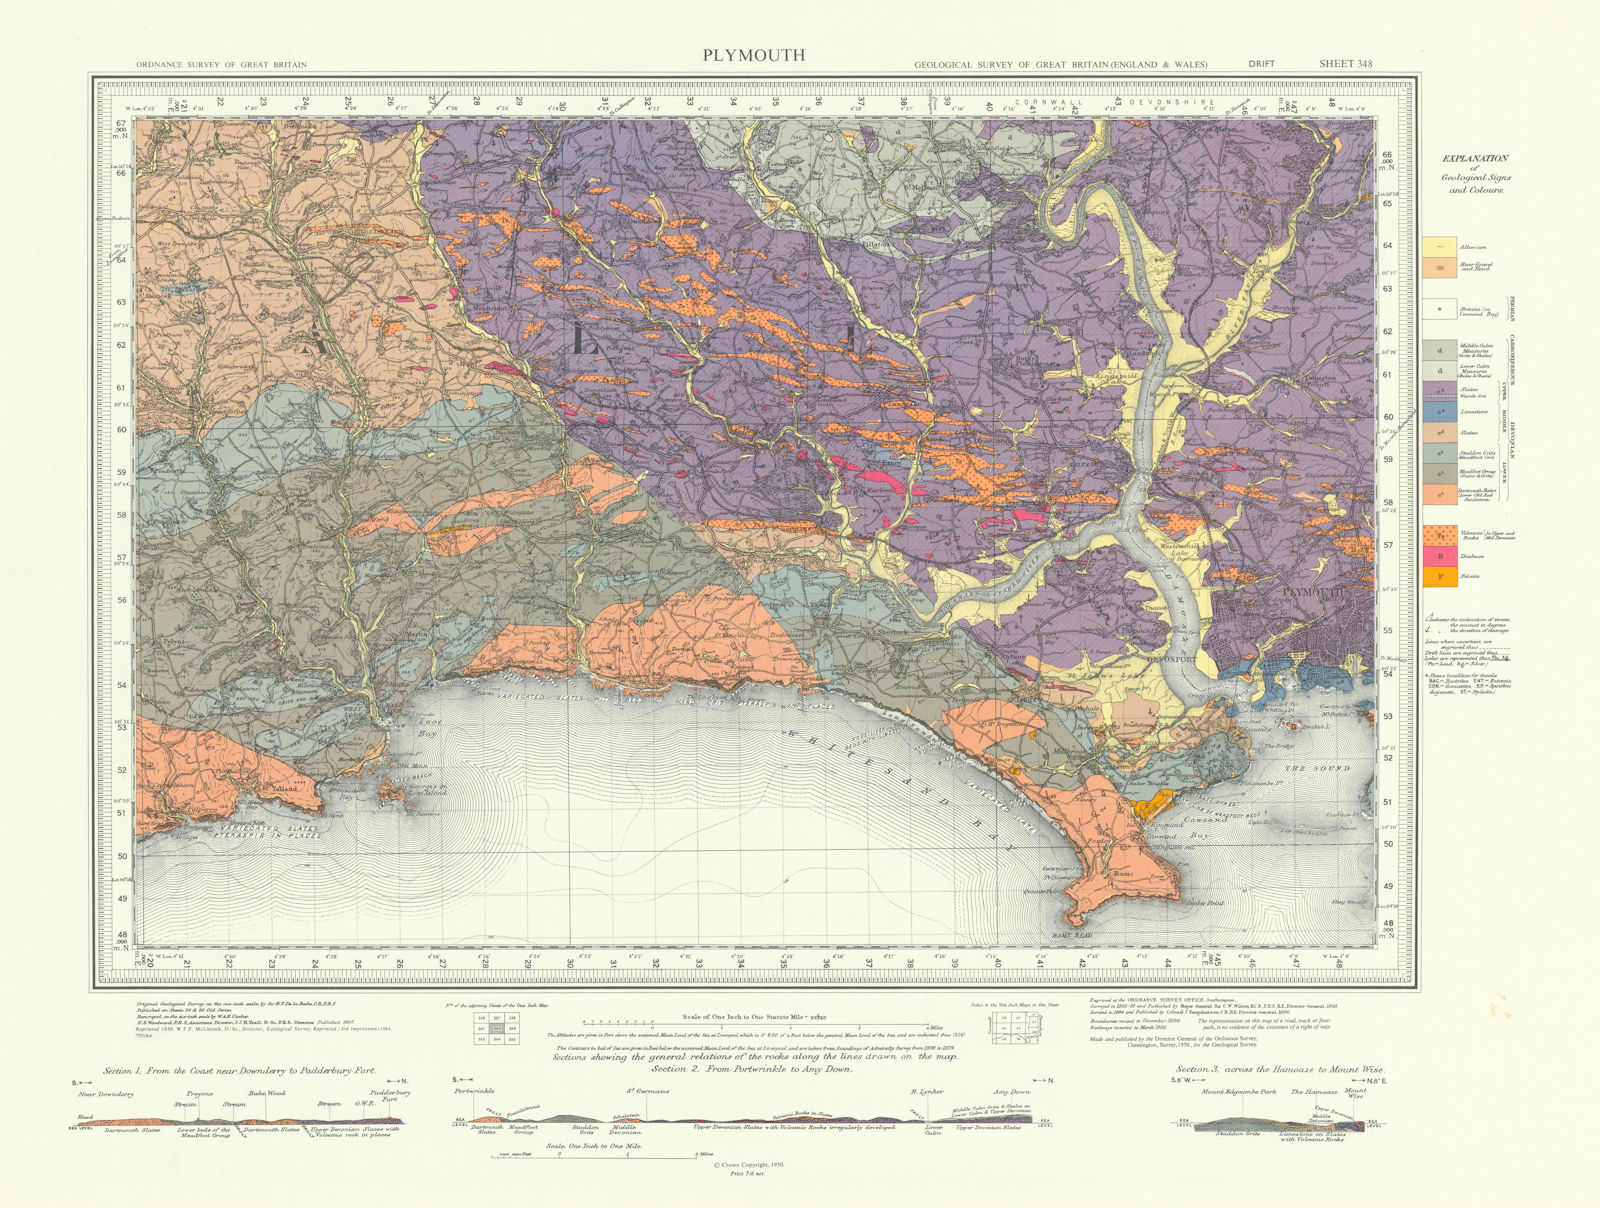 Plymouth geological survey sheet 348 Tamar Valley Cornwall Coast Looe 1964 map